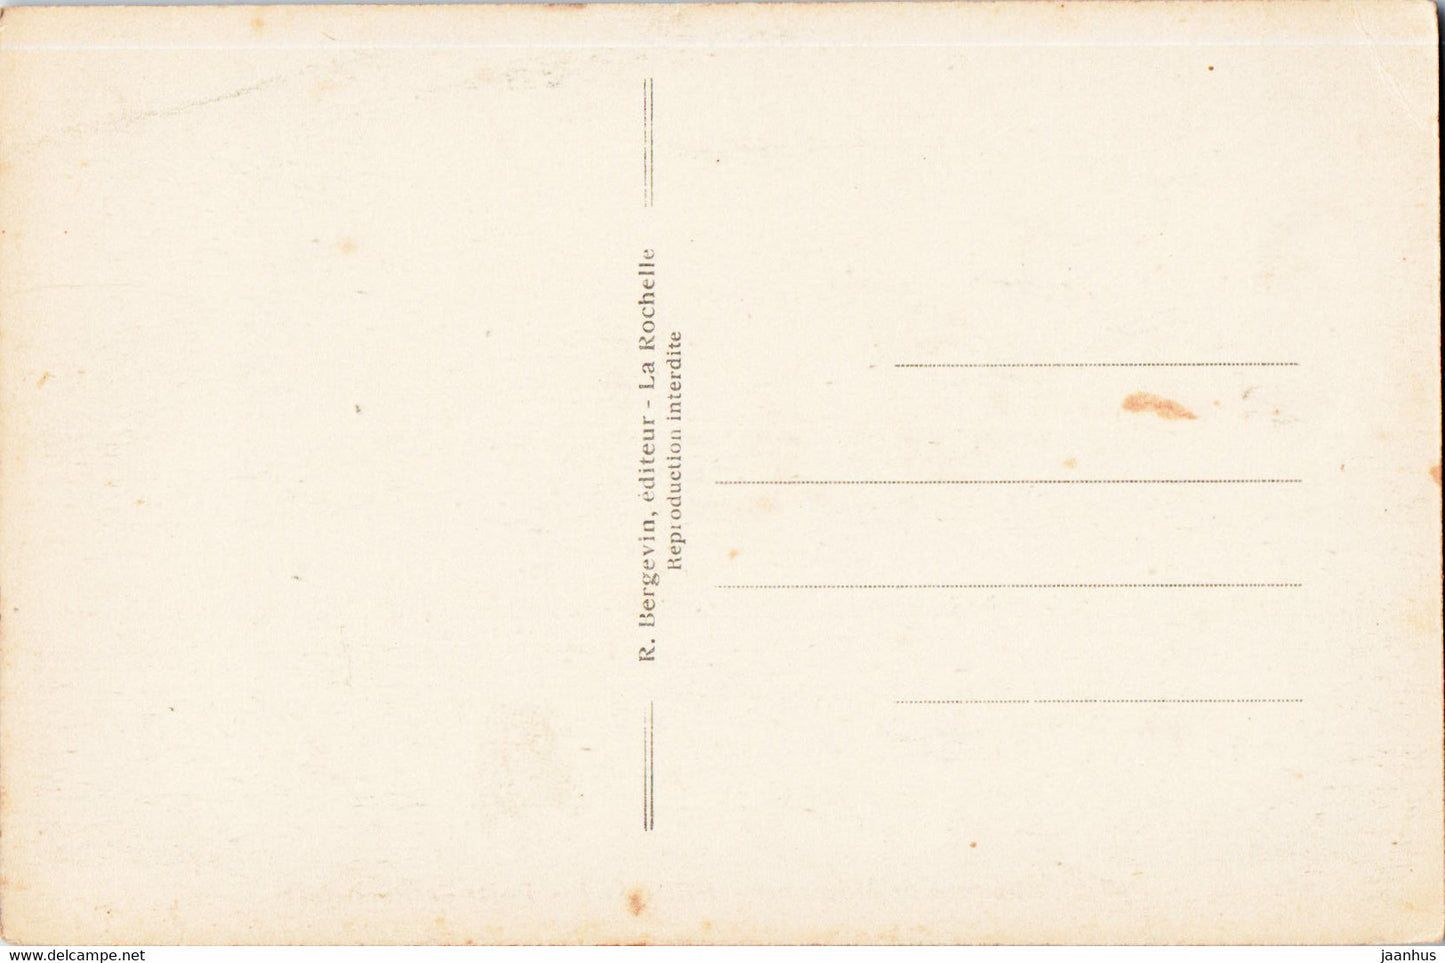 Environs de Marennes - Brouage - Porte de Rochefort - 4955 - old postcard - France - unused